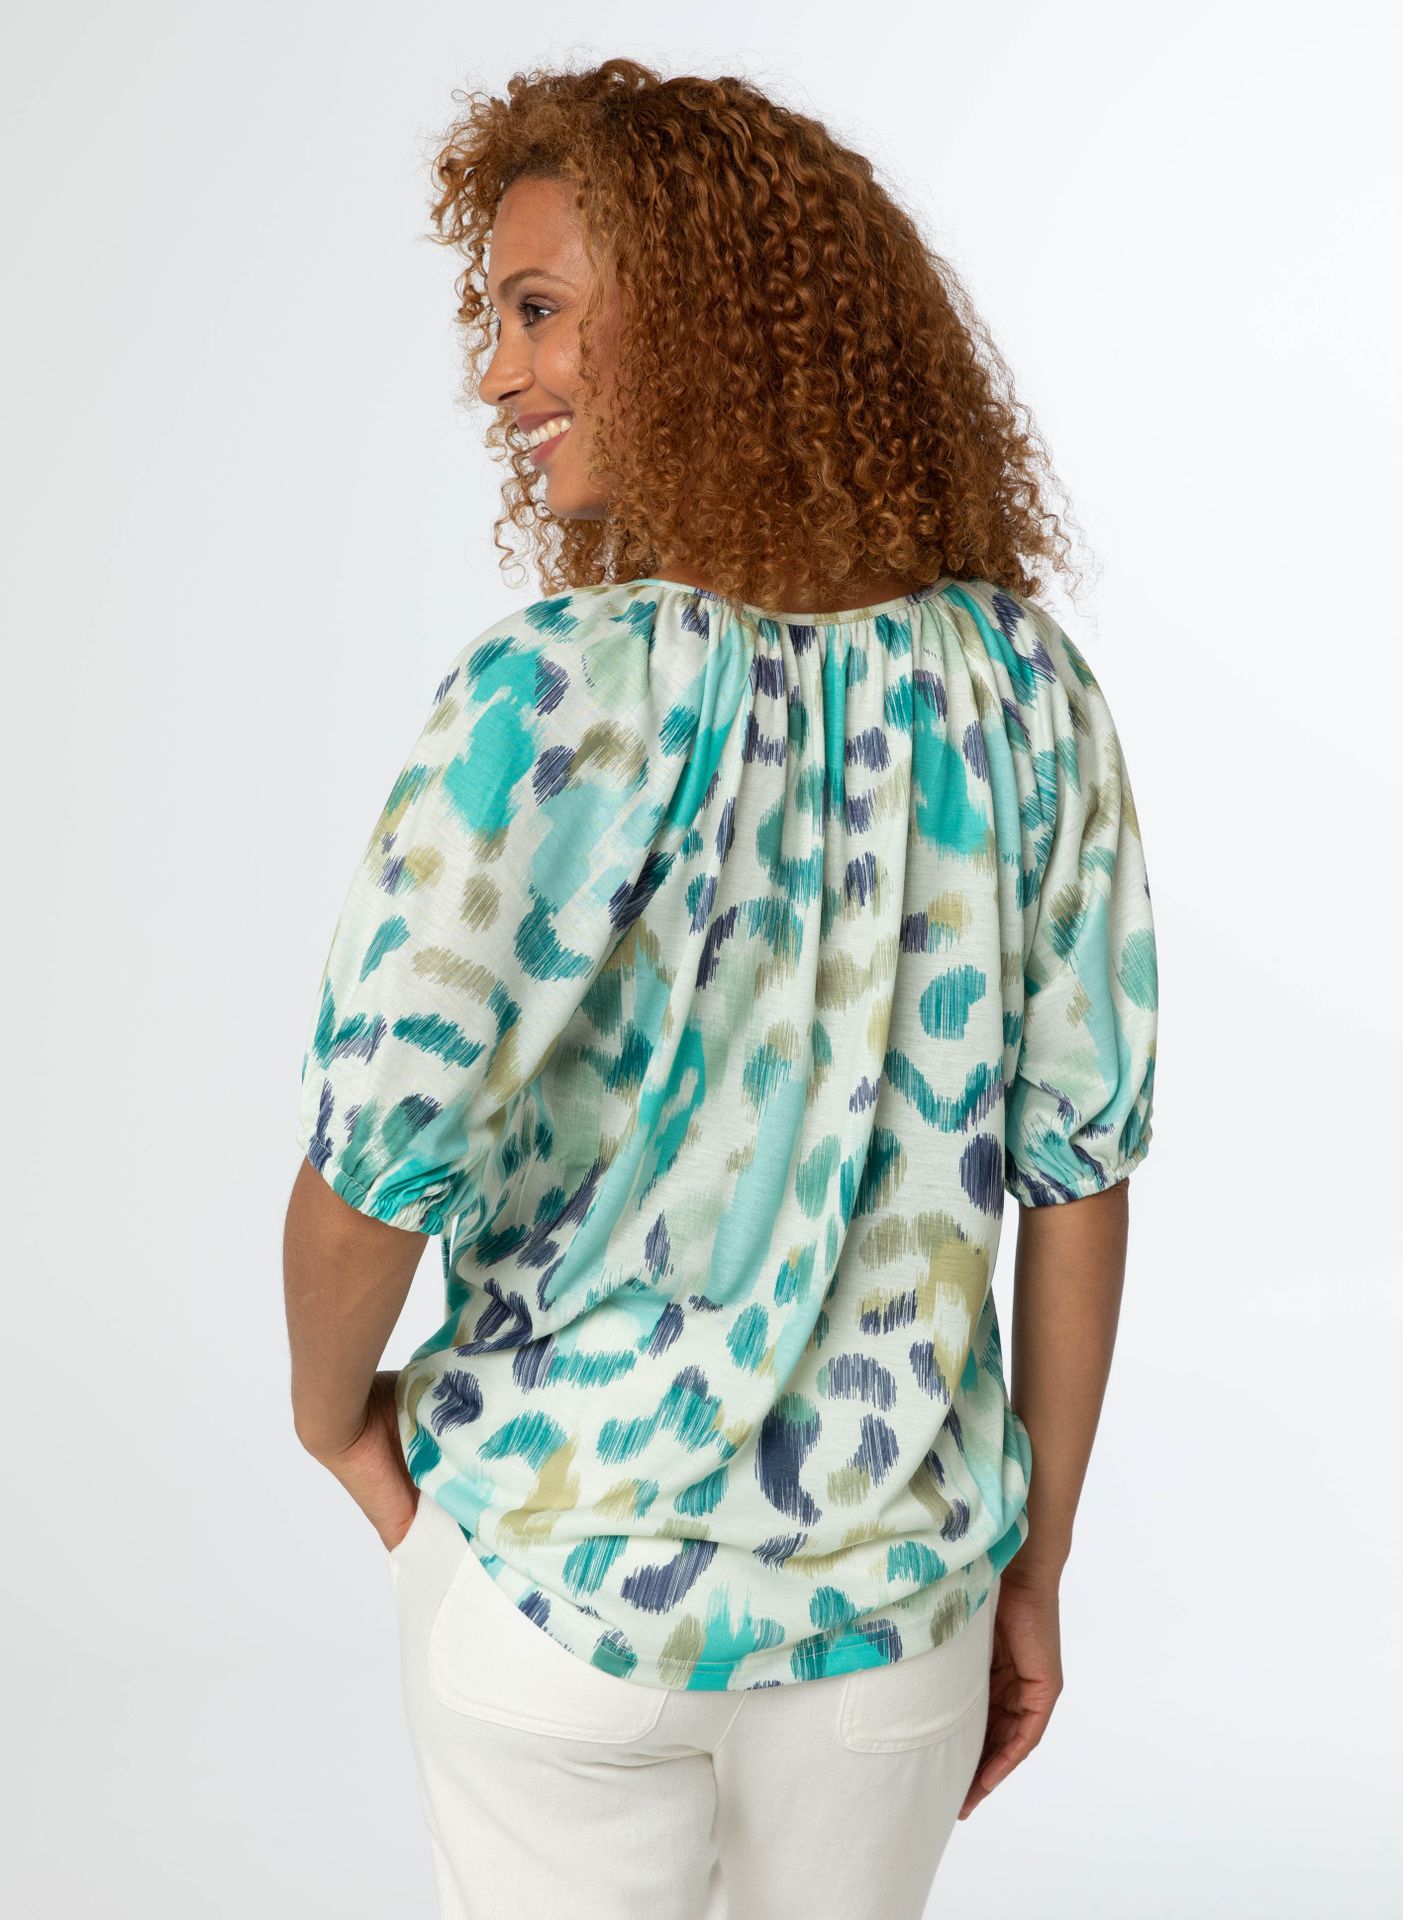 Norah Shirt groen multi mint multicolor 213032-513